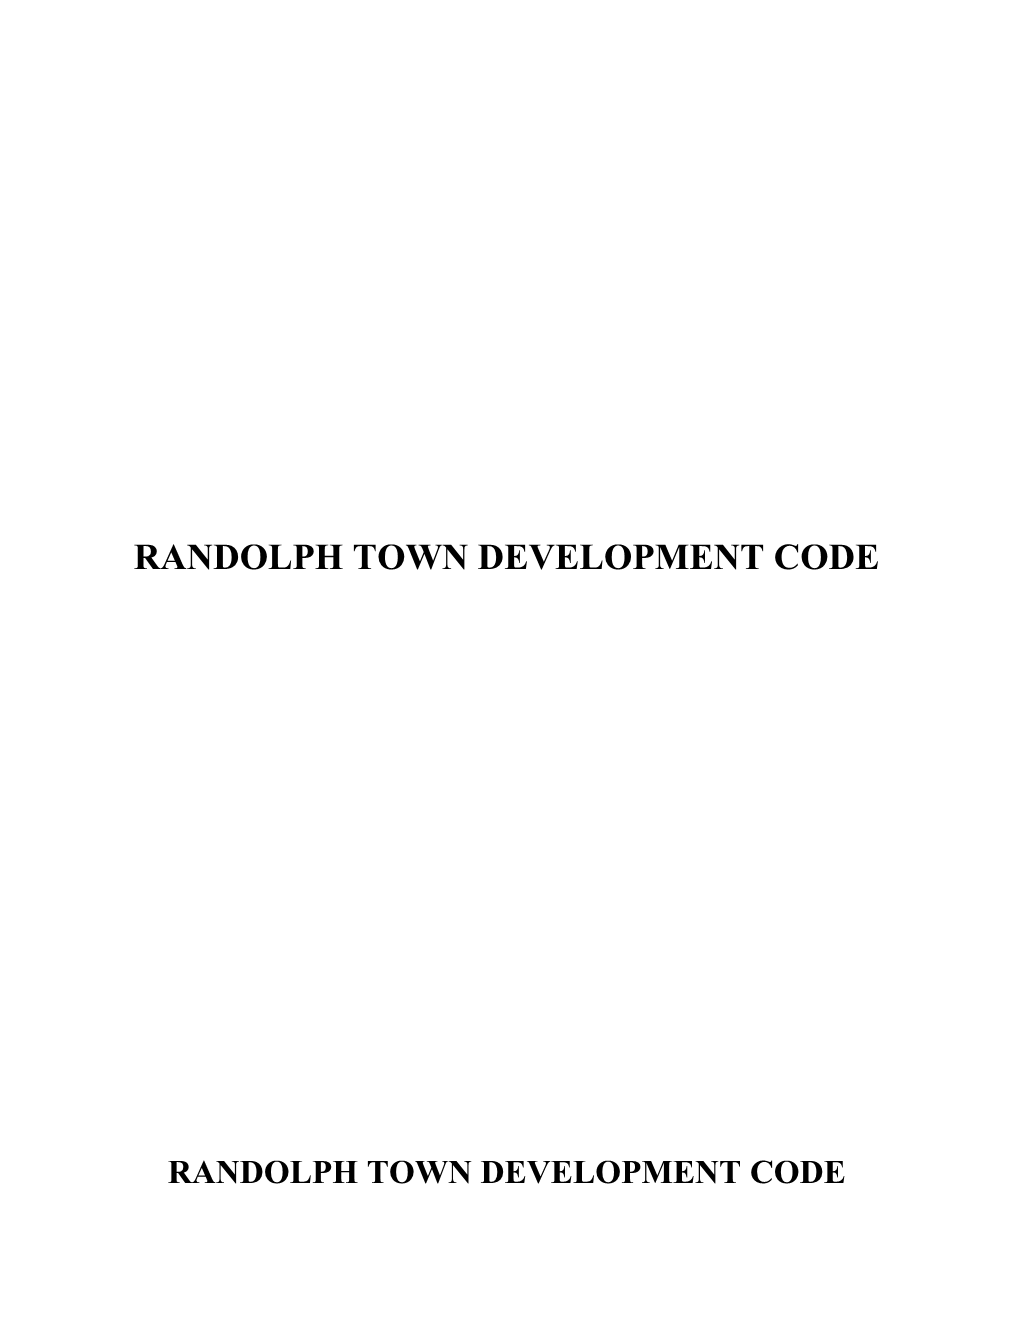 Randolphtown Development Code